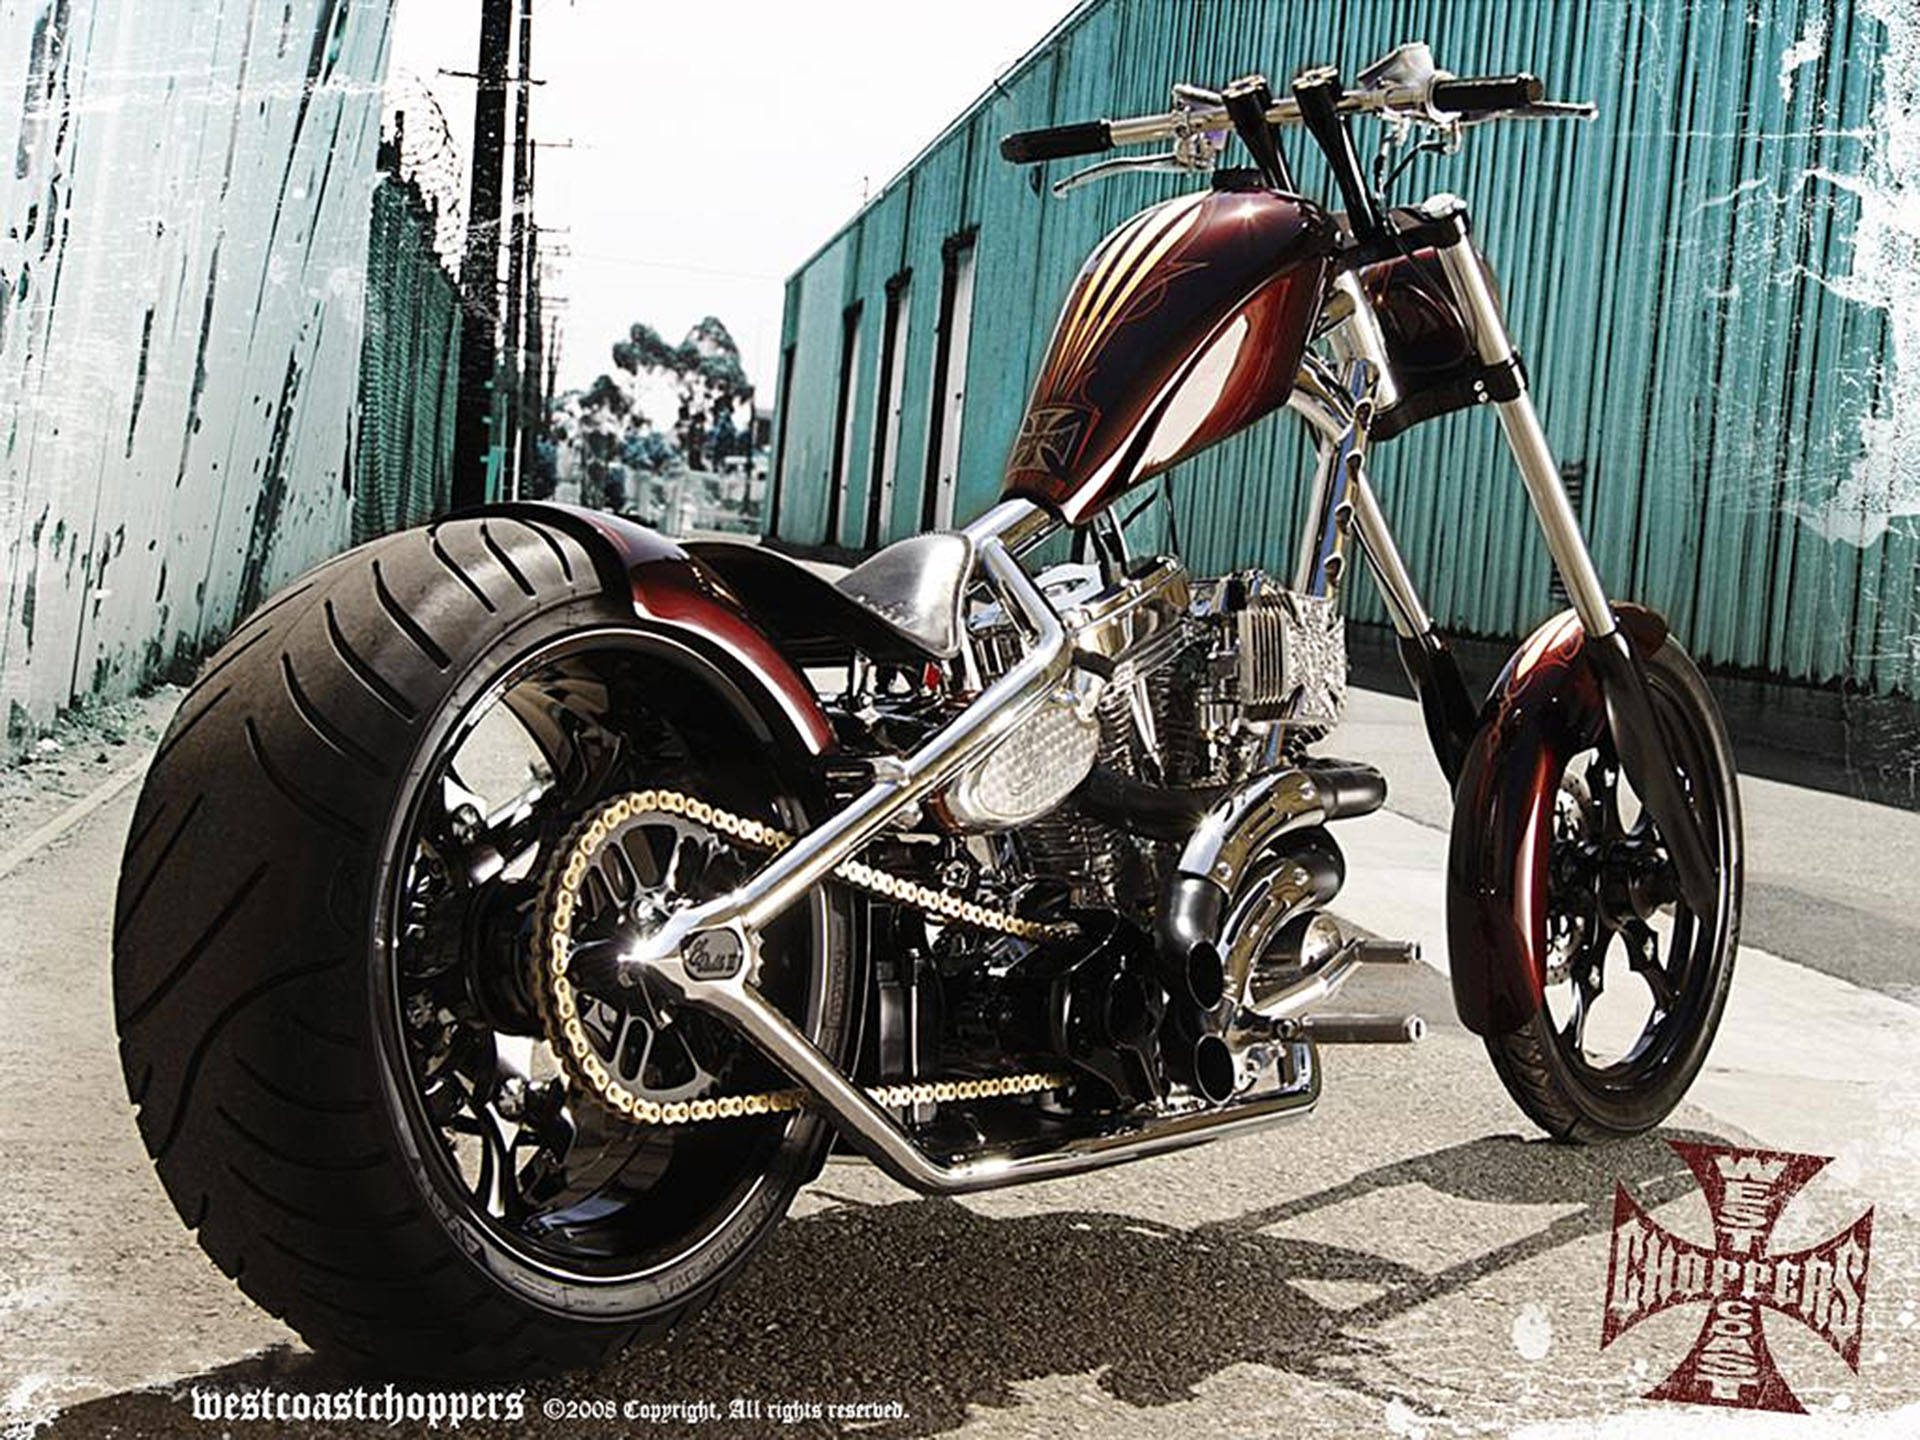 West Coast Choppers Maroon Motorcycle Wallpaper